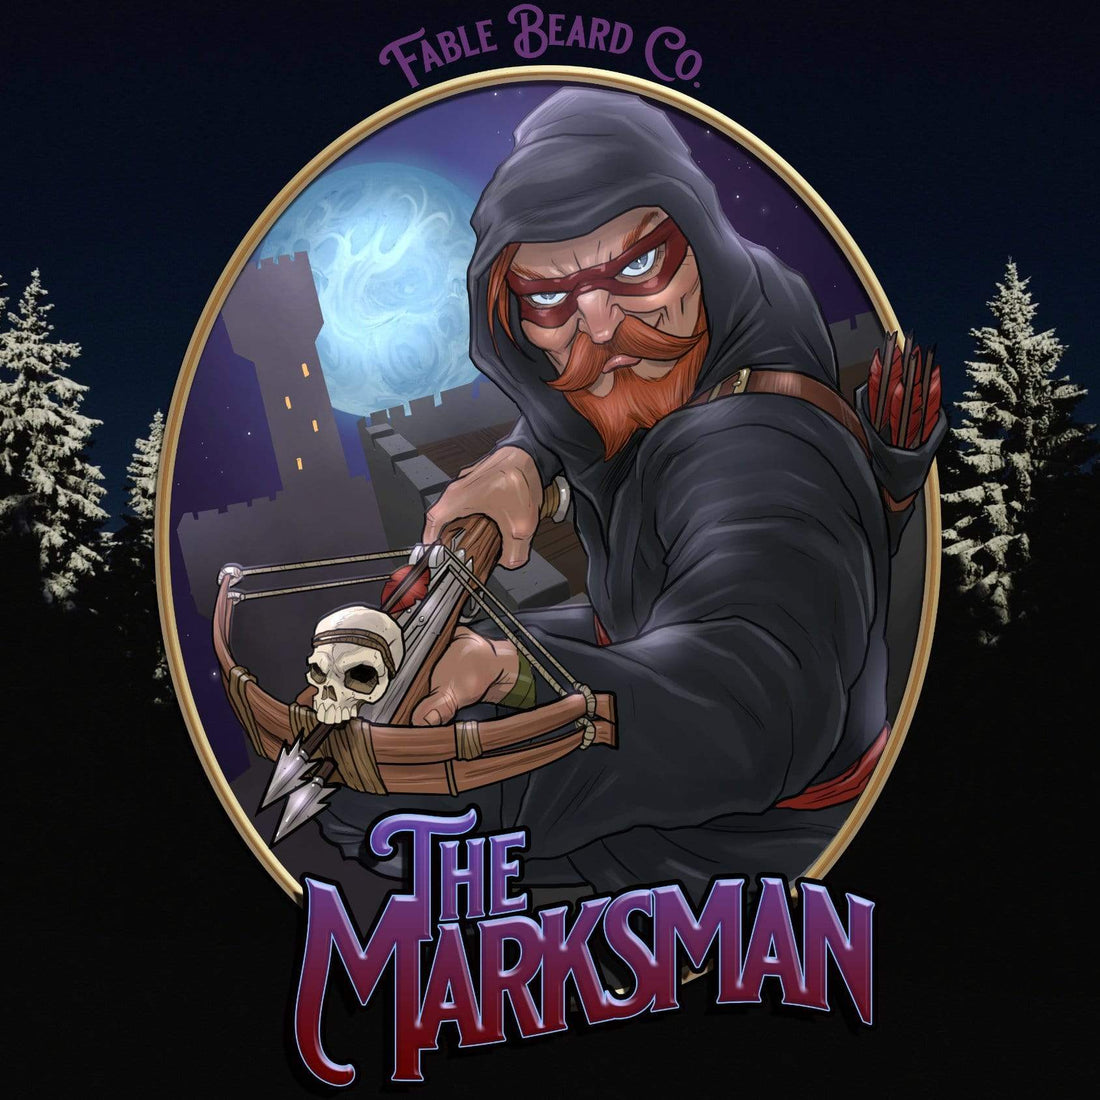 The Marksman- A Tasty Tale